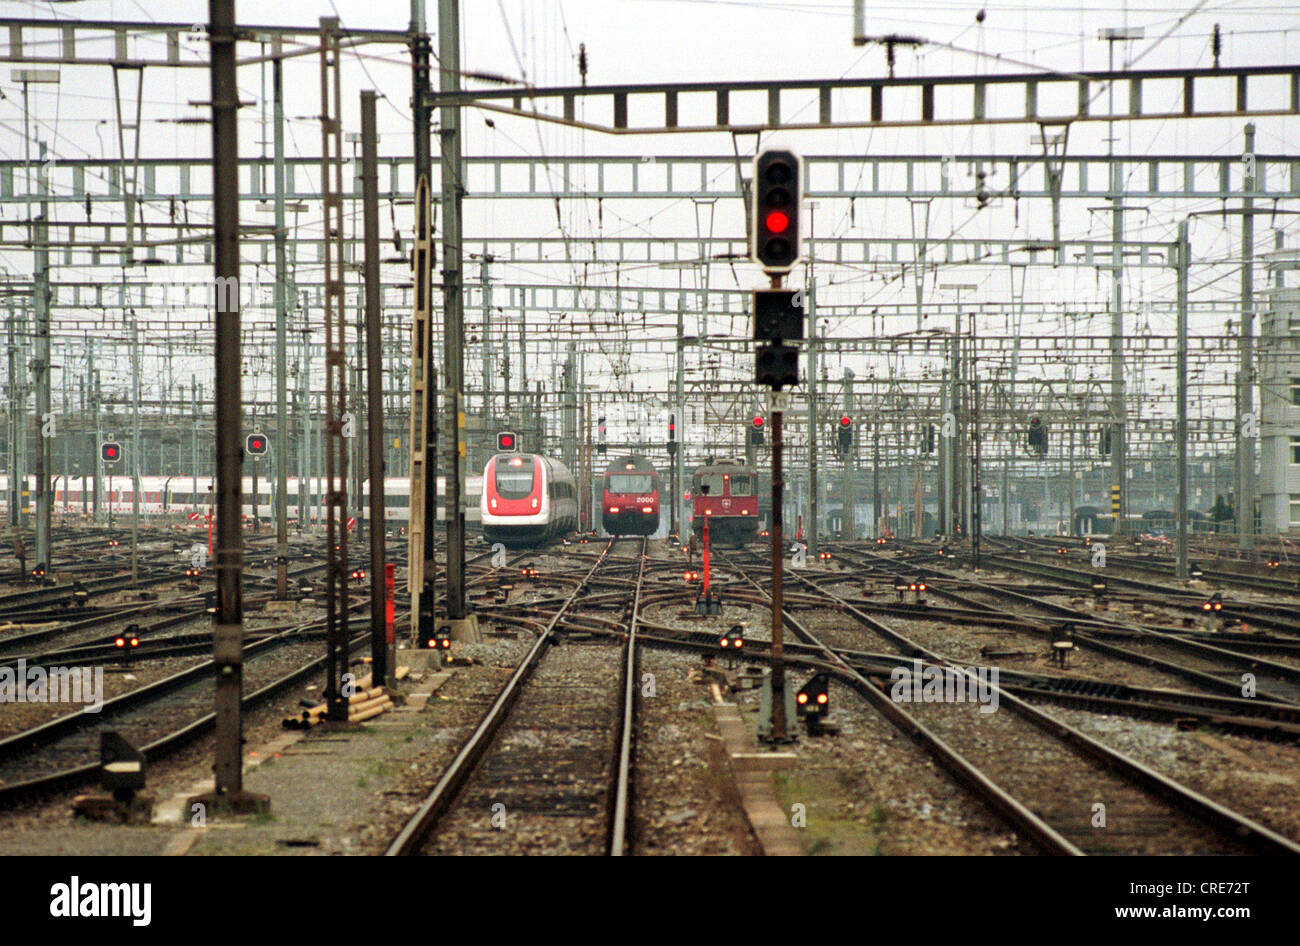 Railway tracks with three locomotives retracting the SBB main station of Zurich, Switzerland Stock Photo